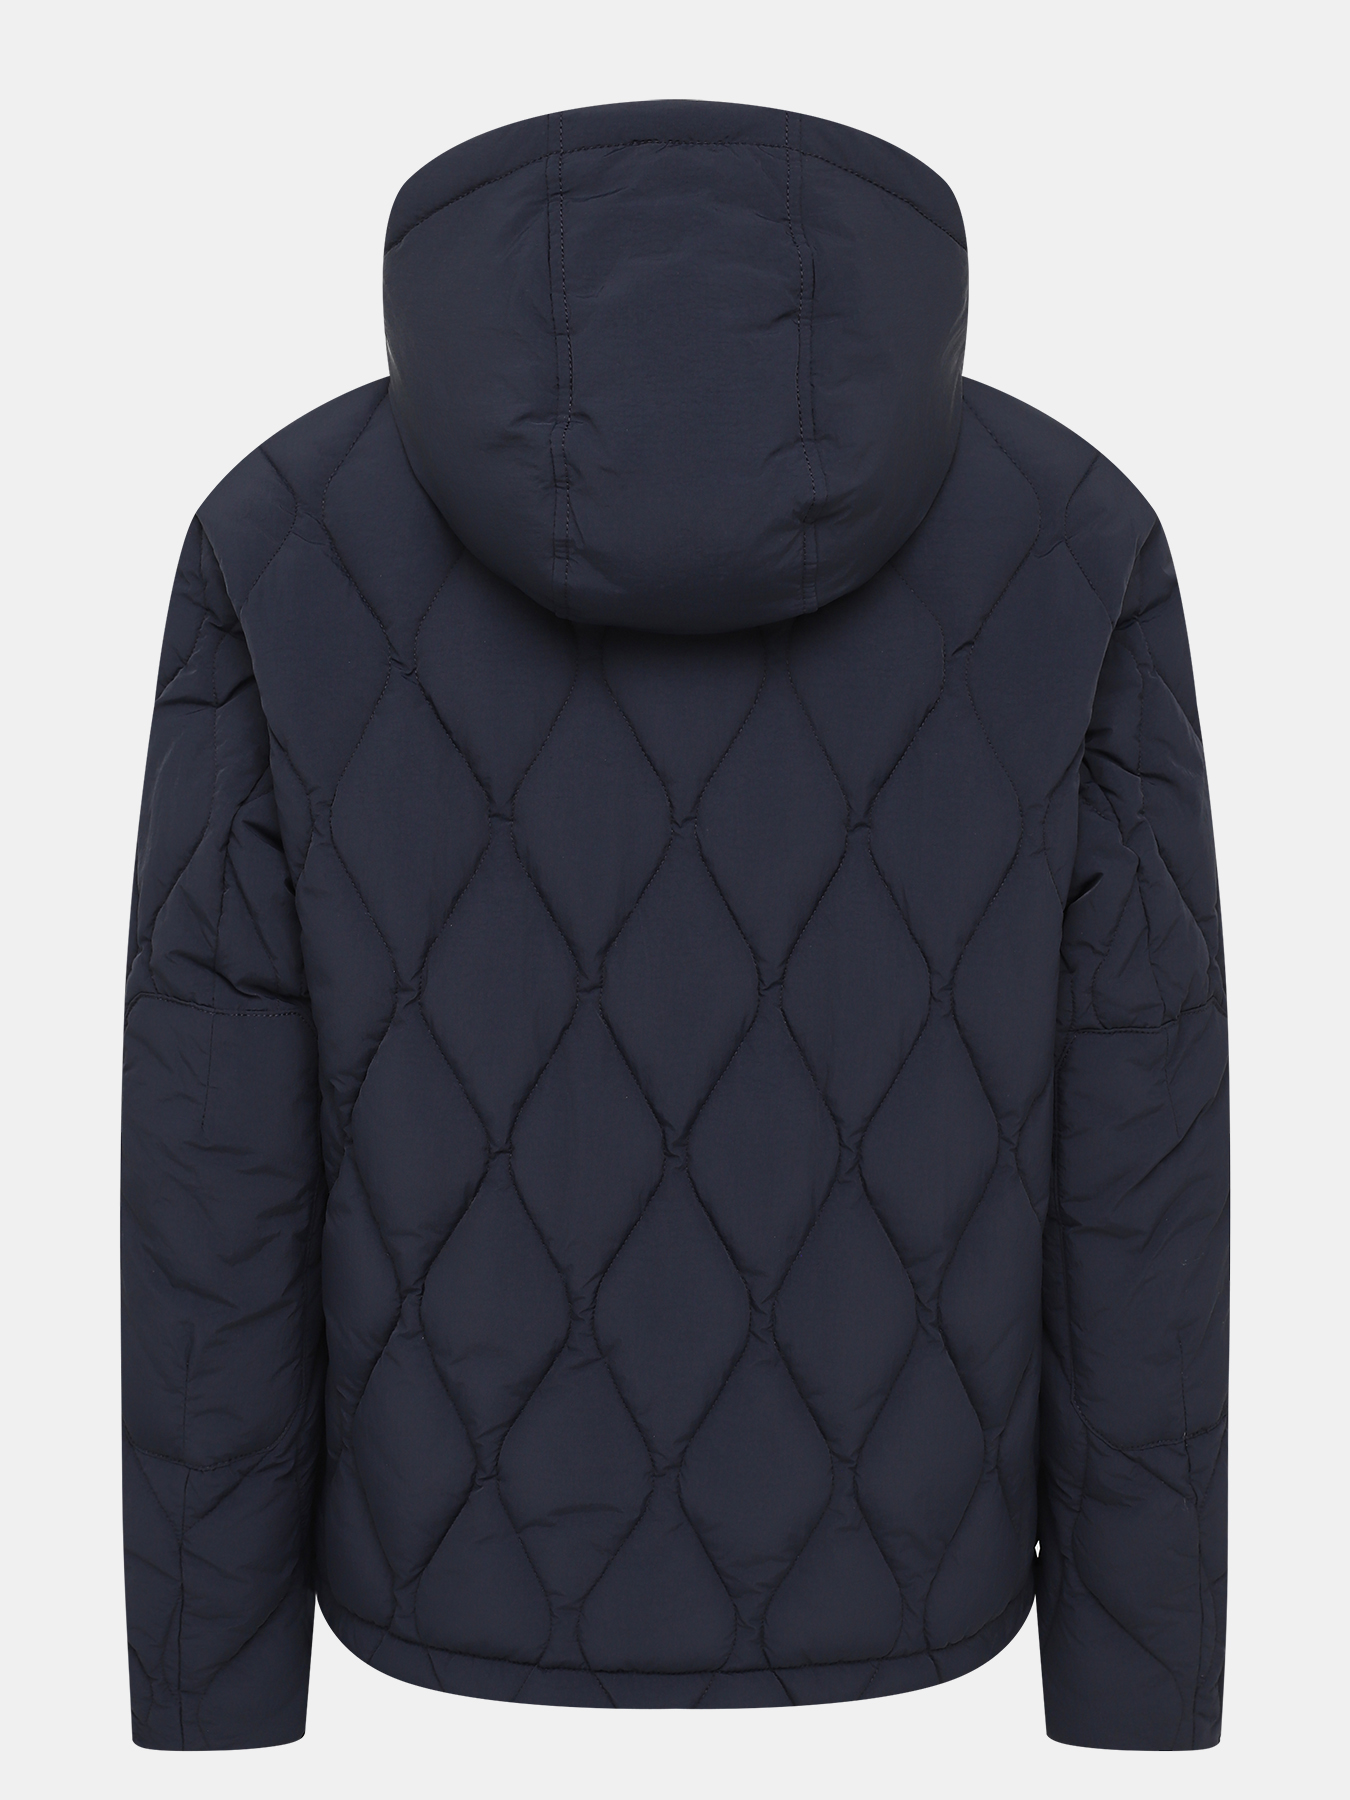 Куртка Onlet BOSS 424685-026, цвет темно-синий, размер 50 - фото 2